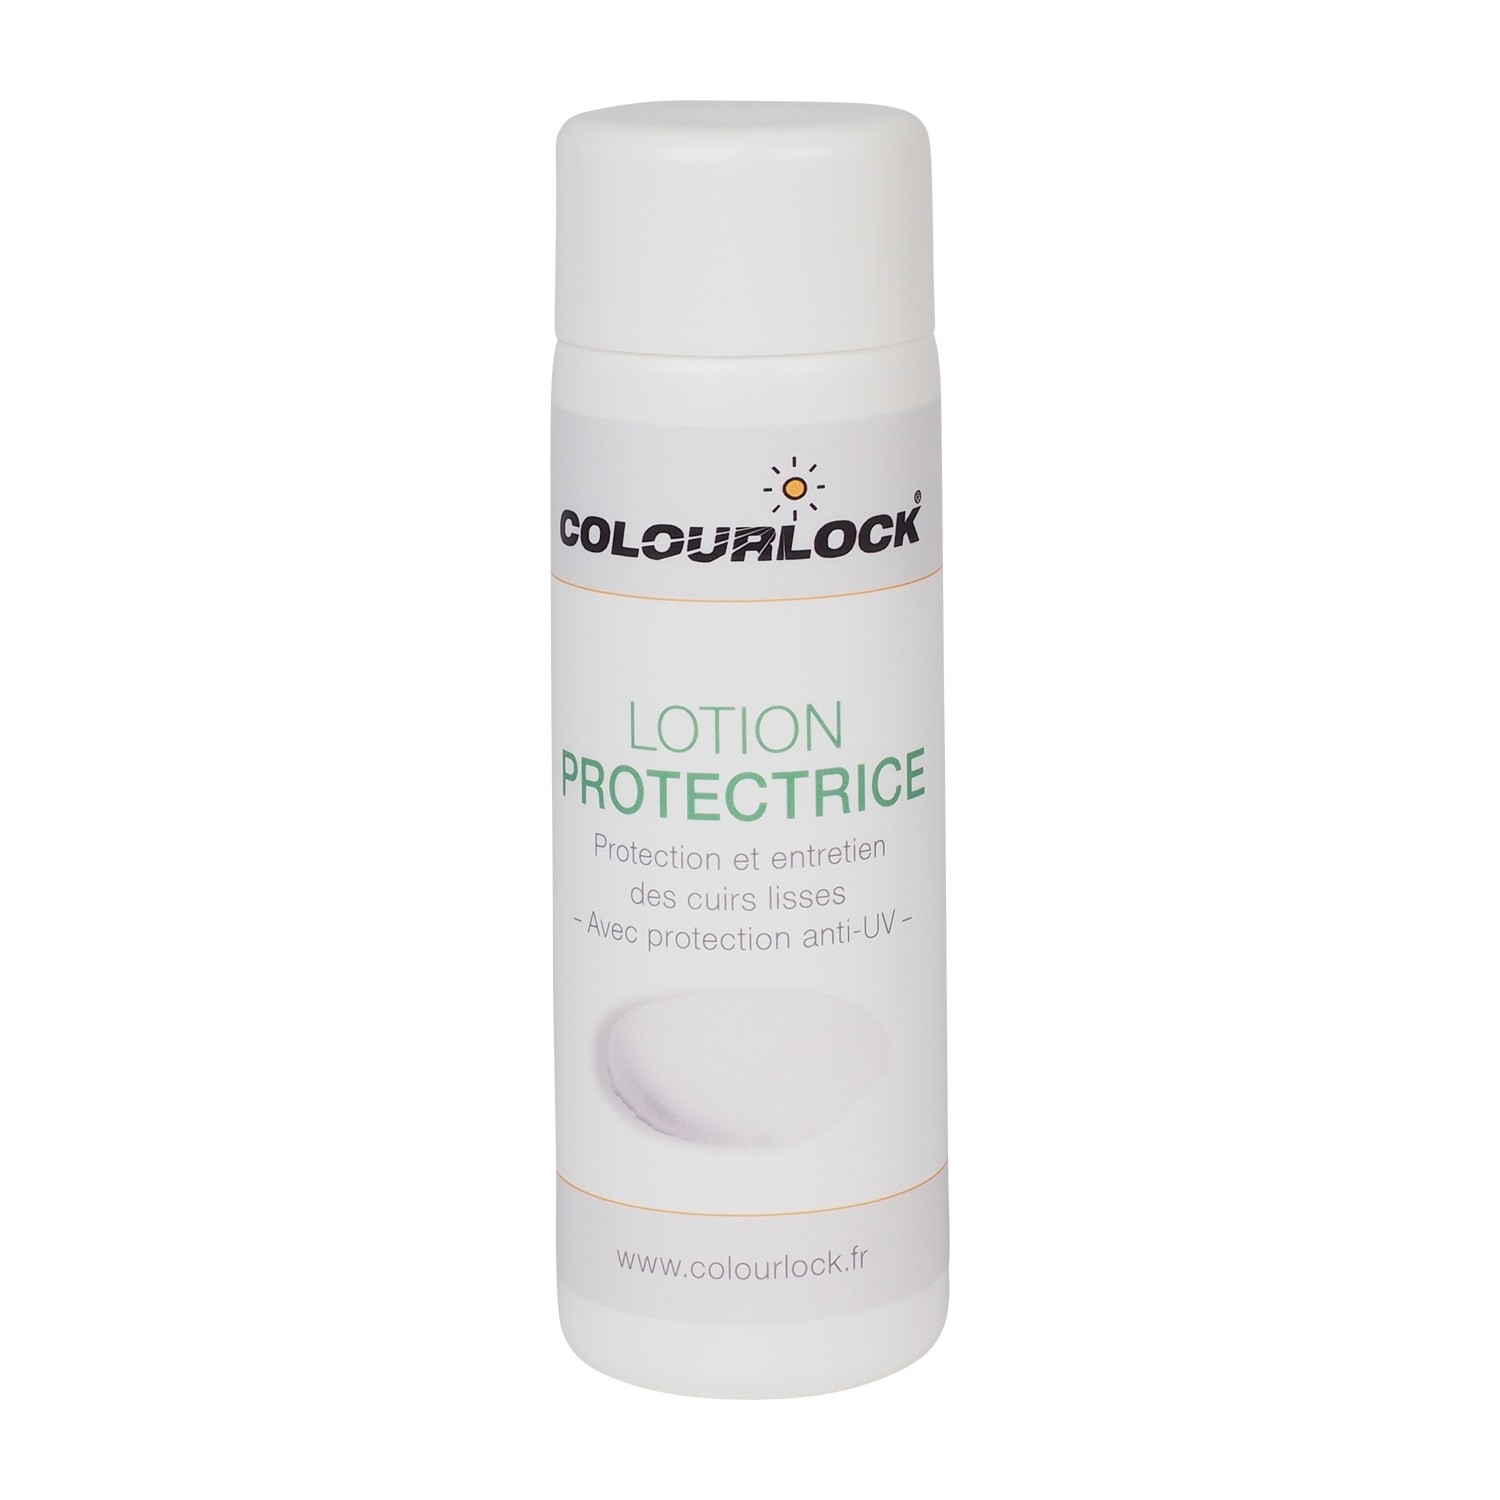 Lotion protectrice COLOURLOCK, 150 ml